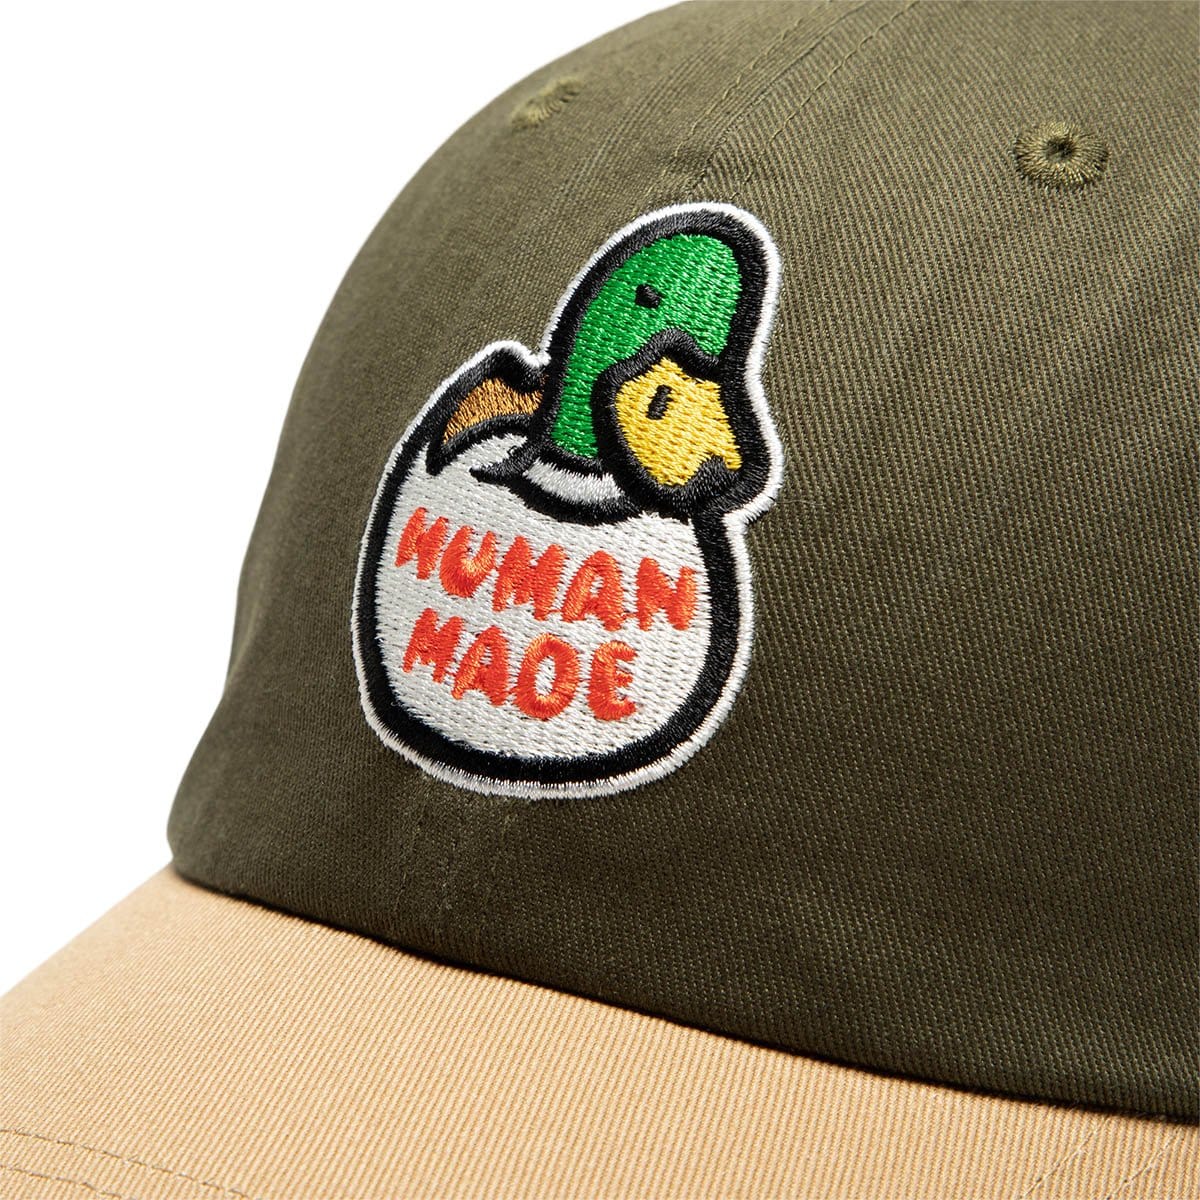 Human Made Headwear OLIVE DRAB / O/S 6 PANEL TWILL CAP #4